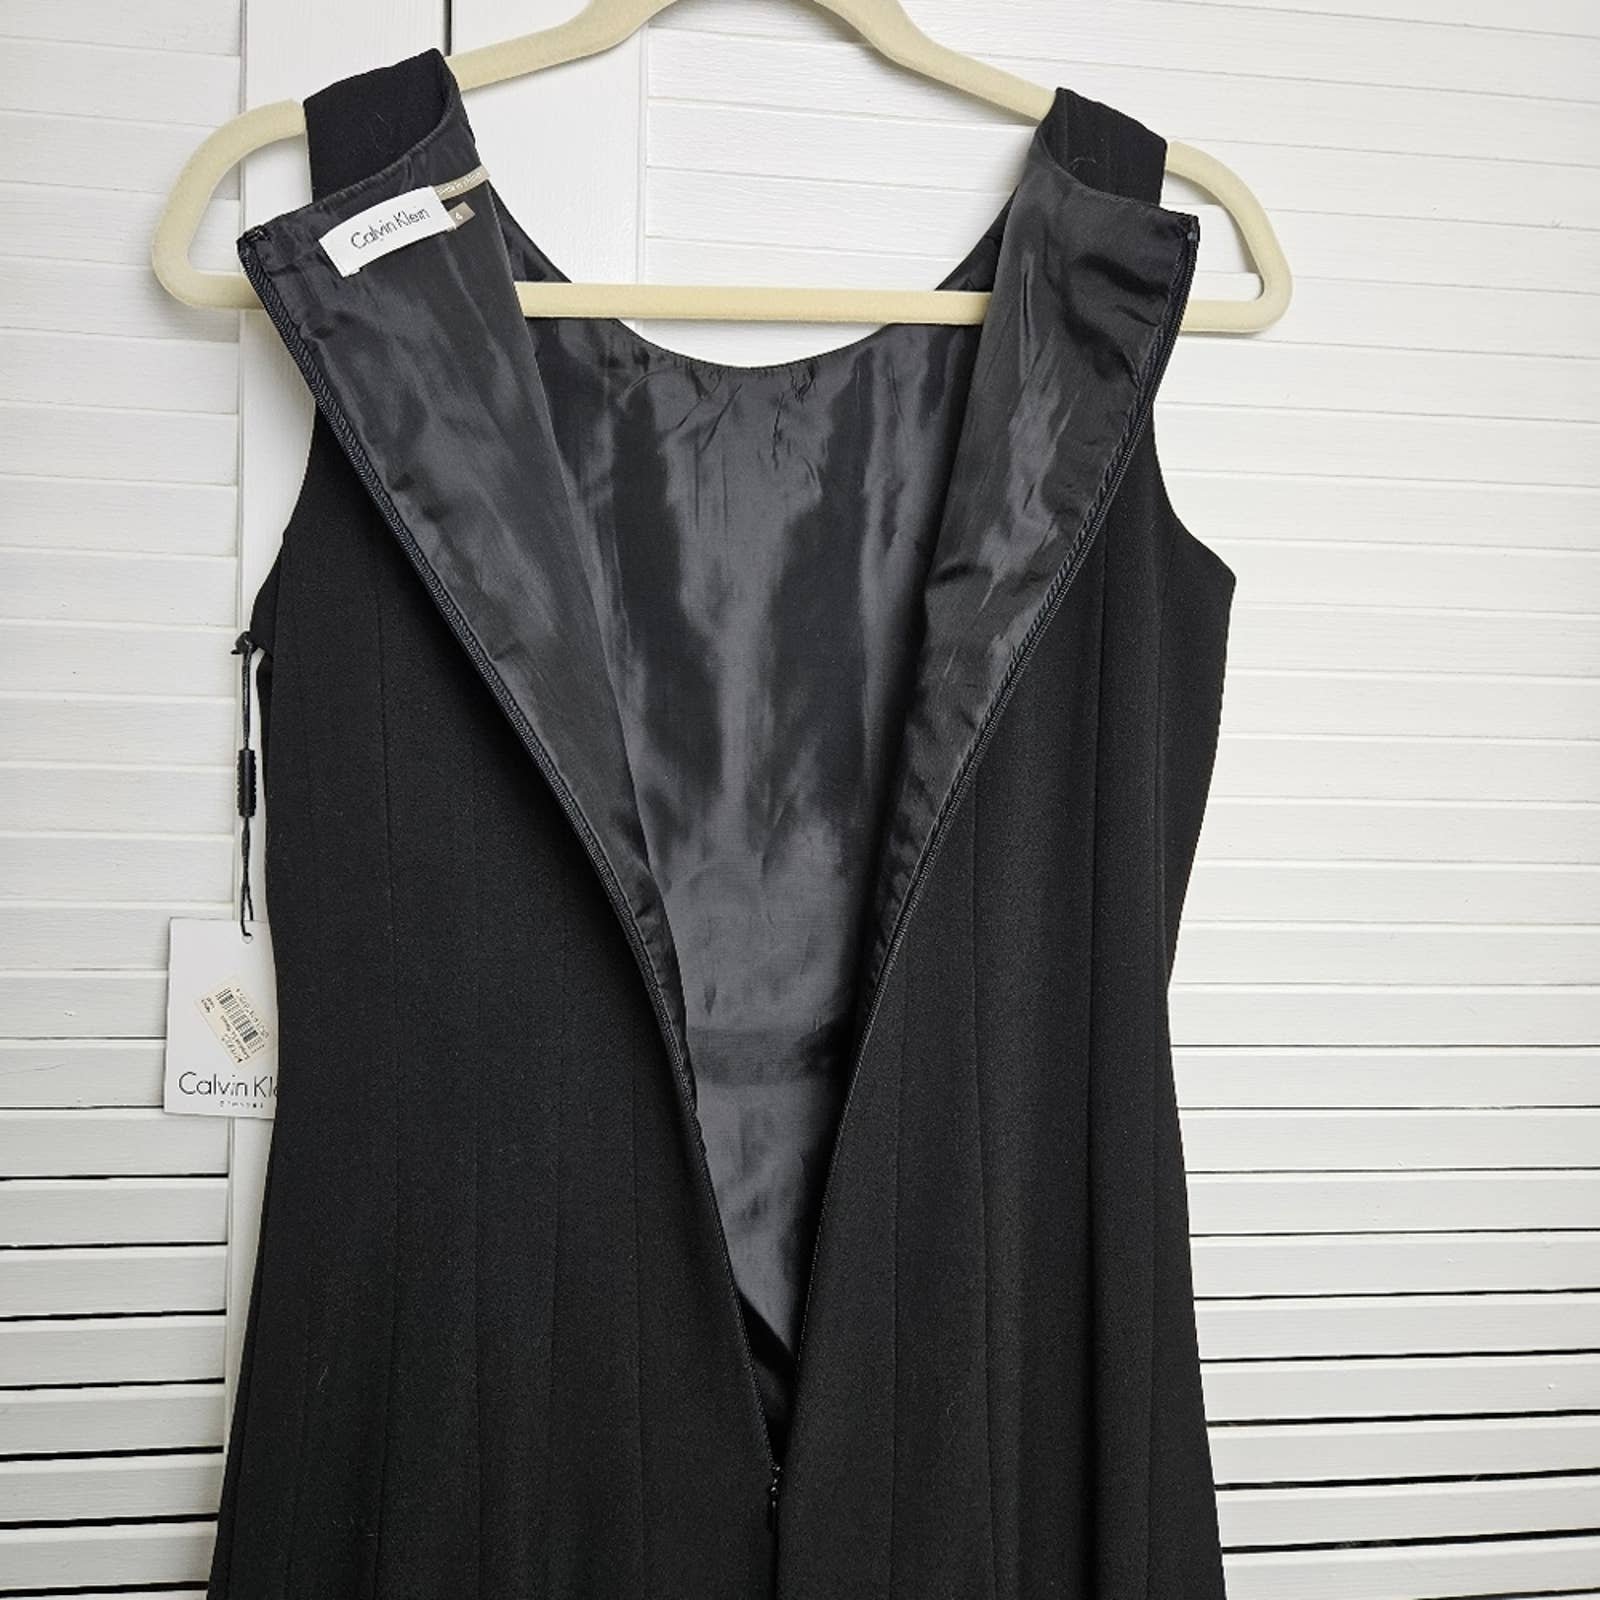 Promotions  Calvin Klein Women´s NWT Sleeveless Black Swing Dress Size 4 nZcloVyIm Everyday Low Prices